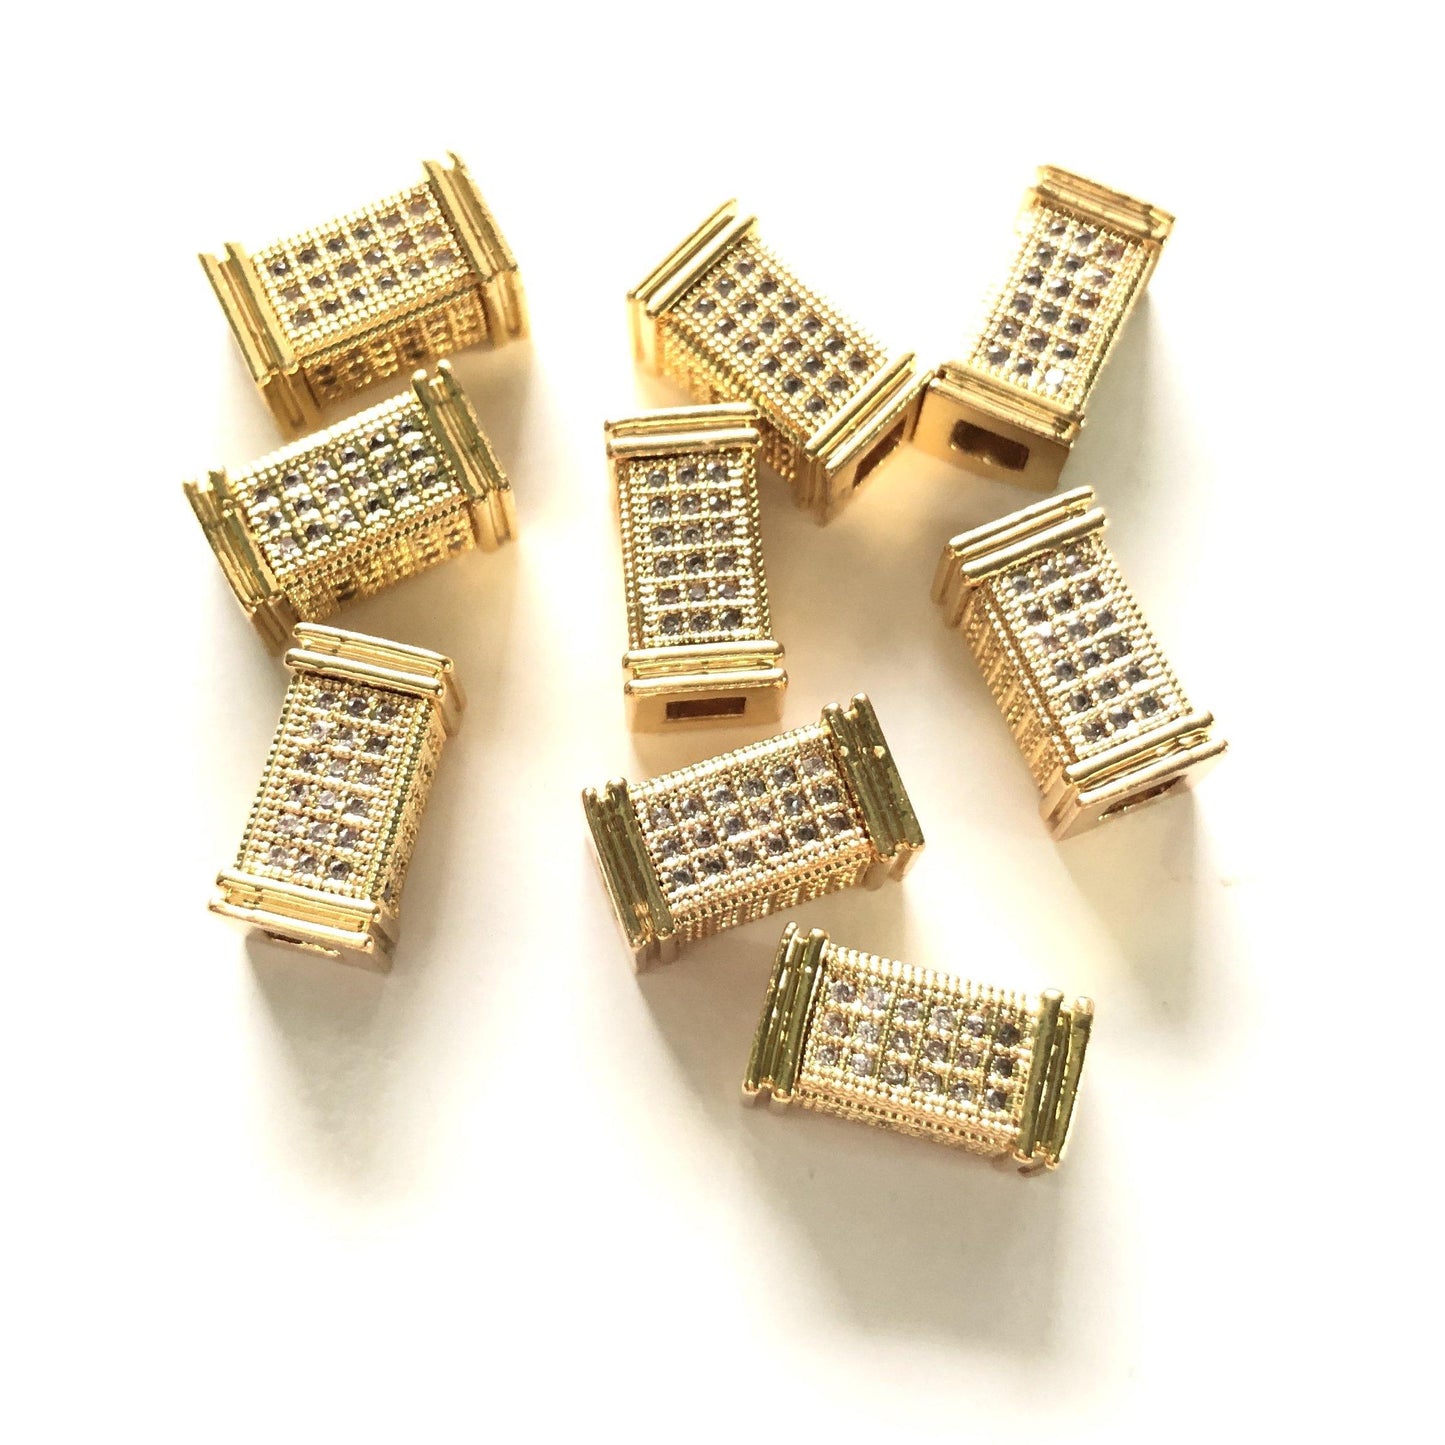 10-20-50pcs/lot 12*6.5mm Clear CZ Paved Cuboid Centerpiece Spacers Gold CZ Paved Spacers Cuboid Spacers Charms Beads Beyond